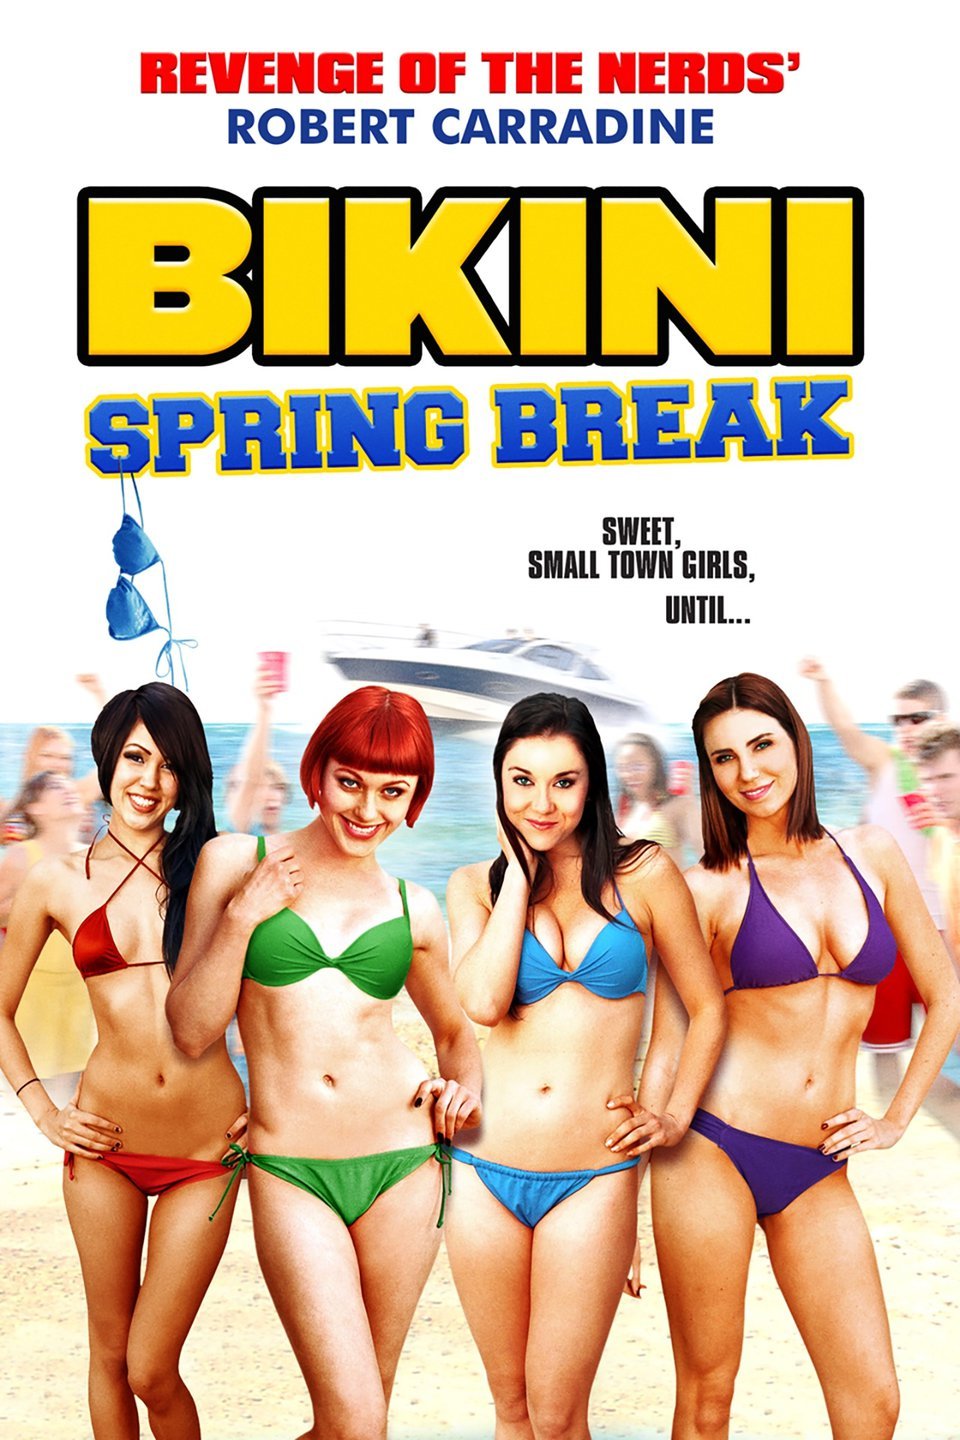 Bikini spring break cast